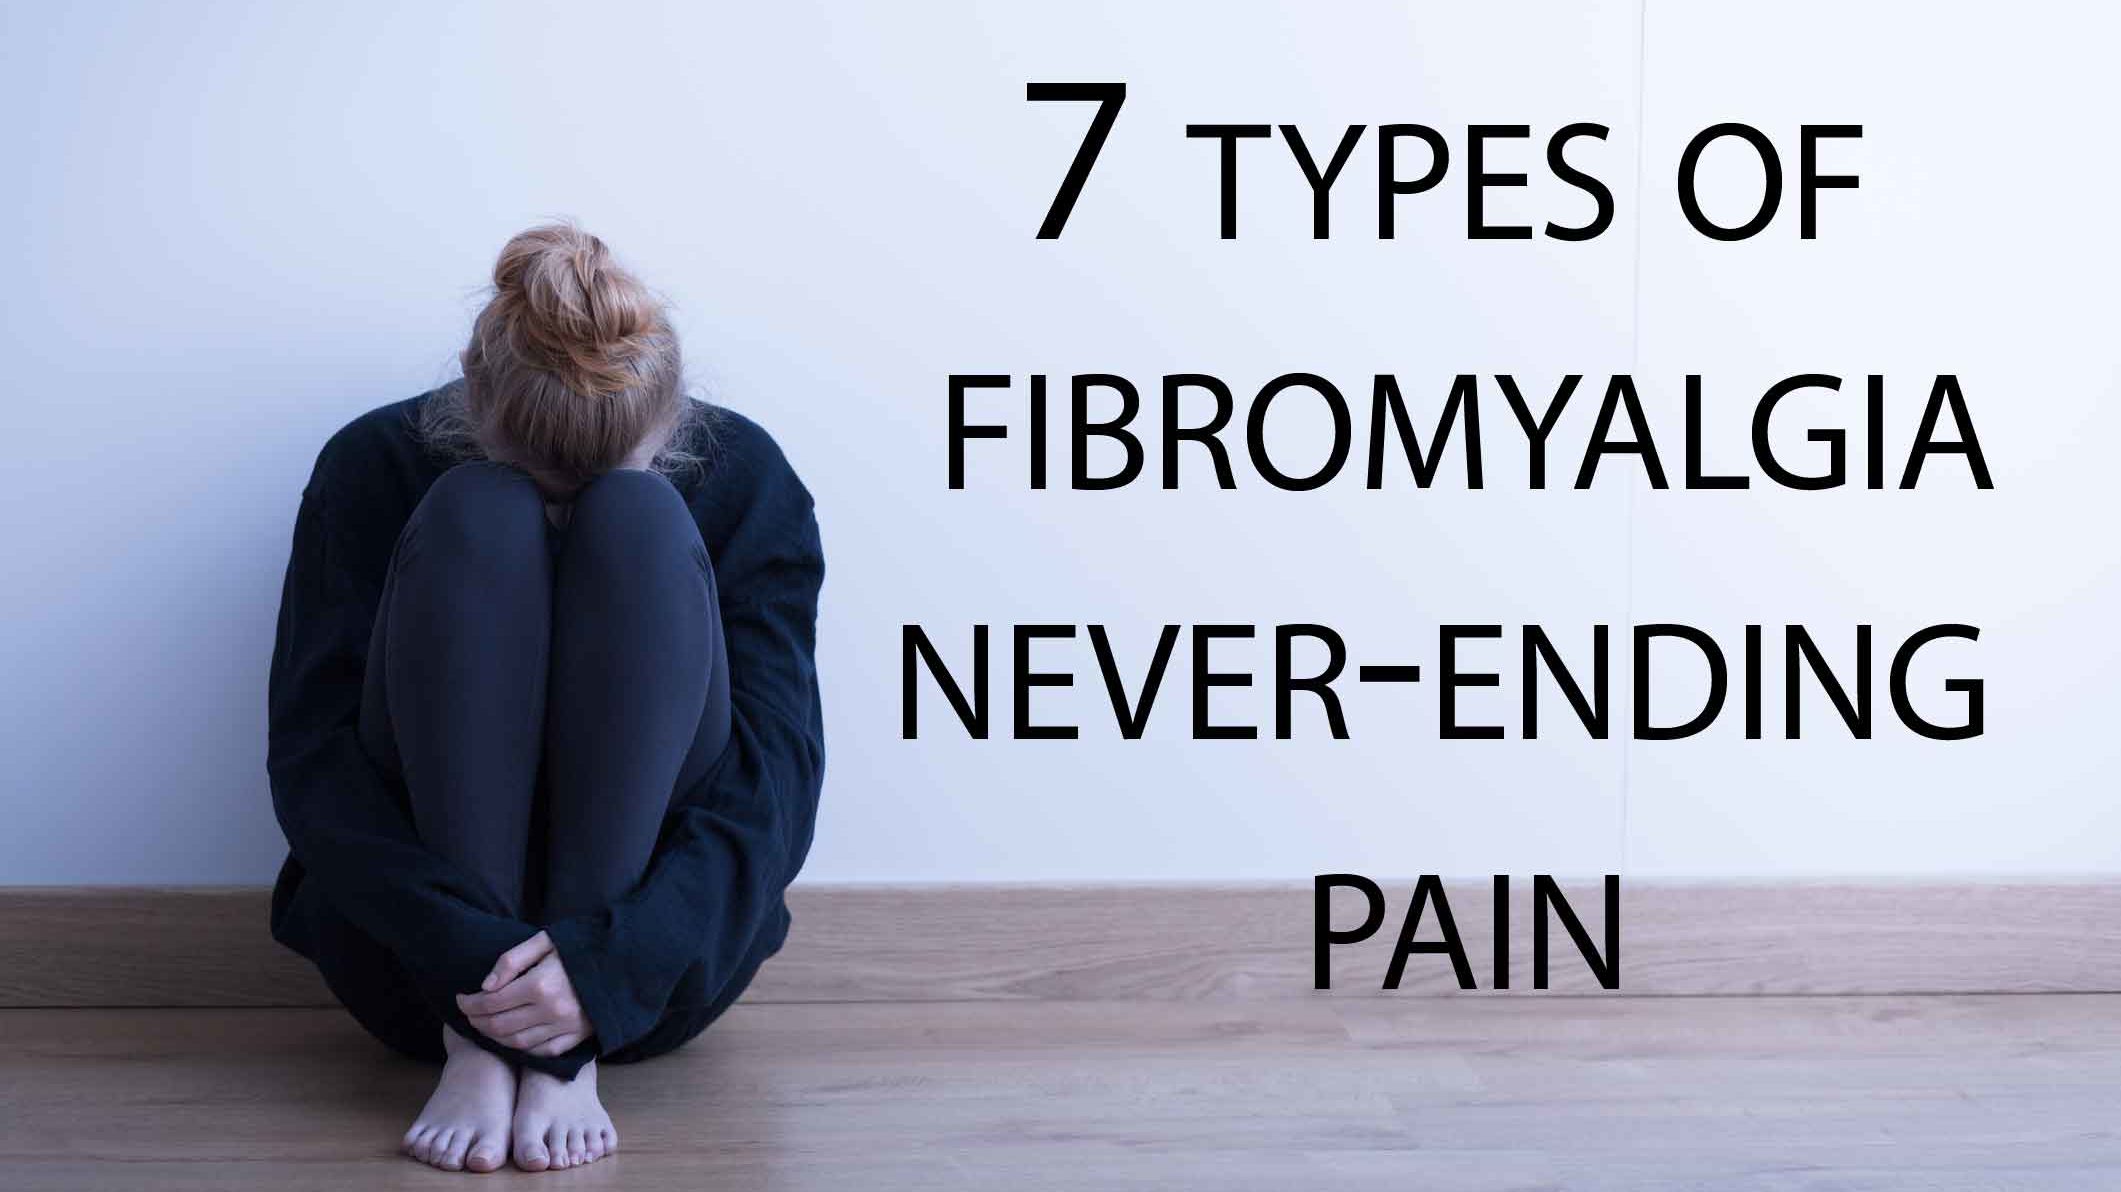 7 types of fibromyalgia never-ending pain